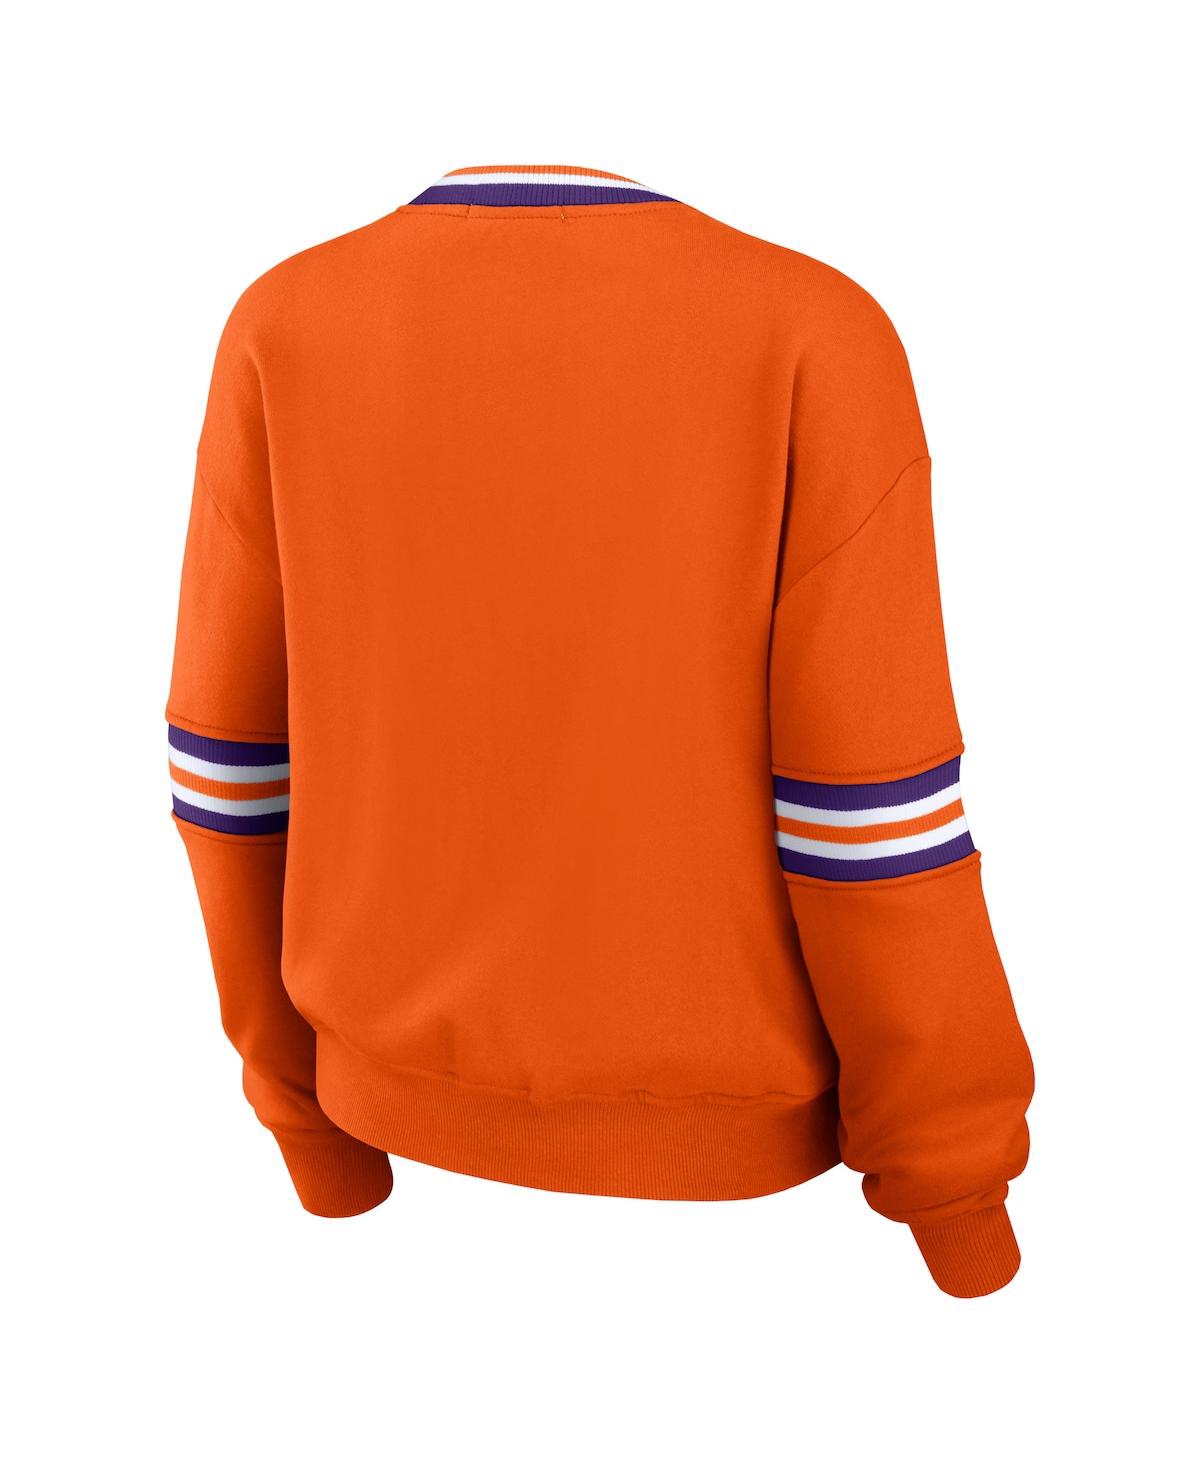 Shop Wear By Erin Andrews Women's  Orange Distressed Clemson Tigers Vintage-like Pullover Sweatshirt